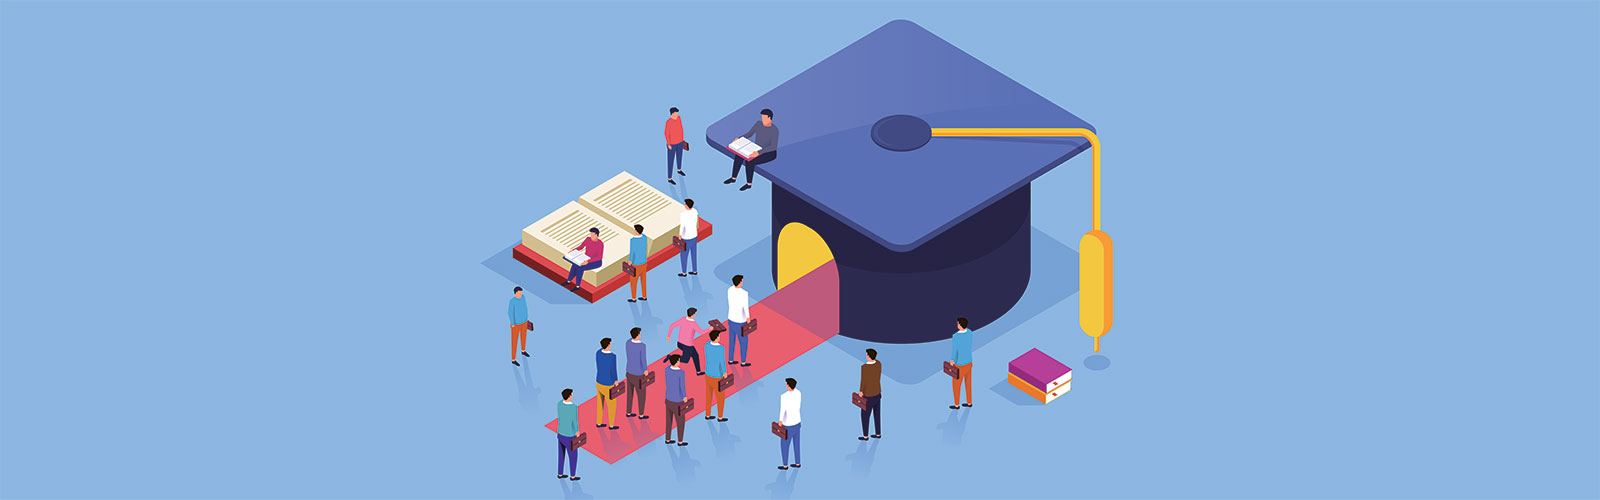 Graphic depicting students entering college - a large graduation cap